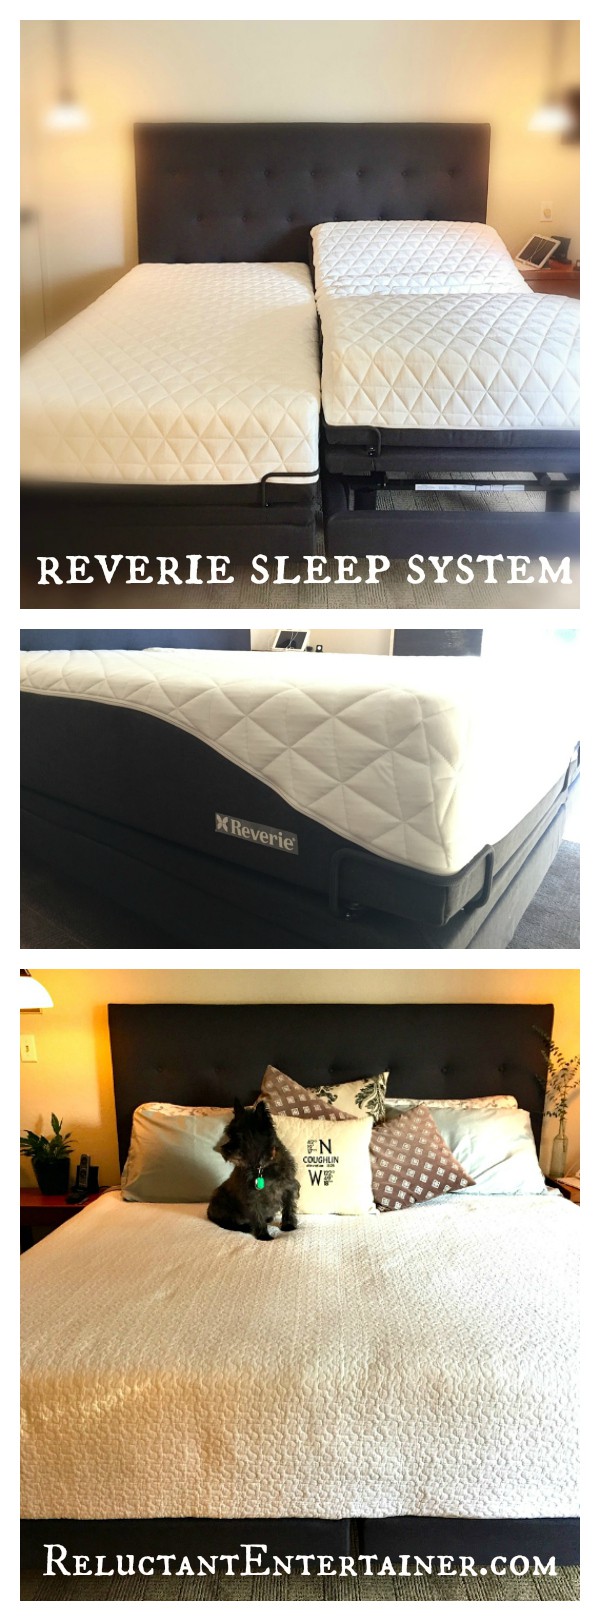 Reverie Sleep System for Your Best Night’s Sleep